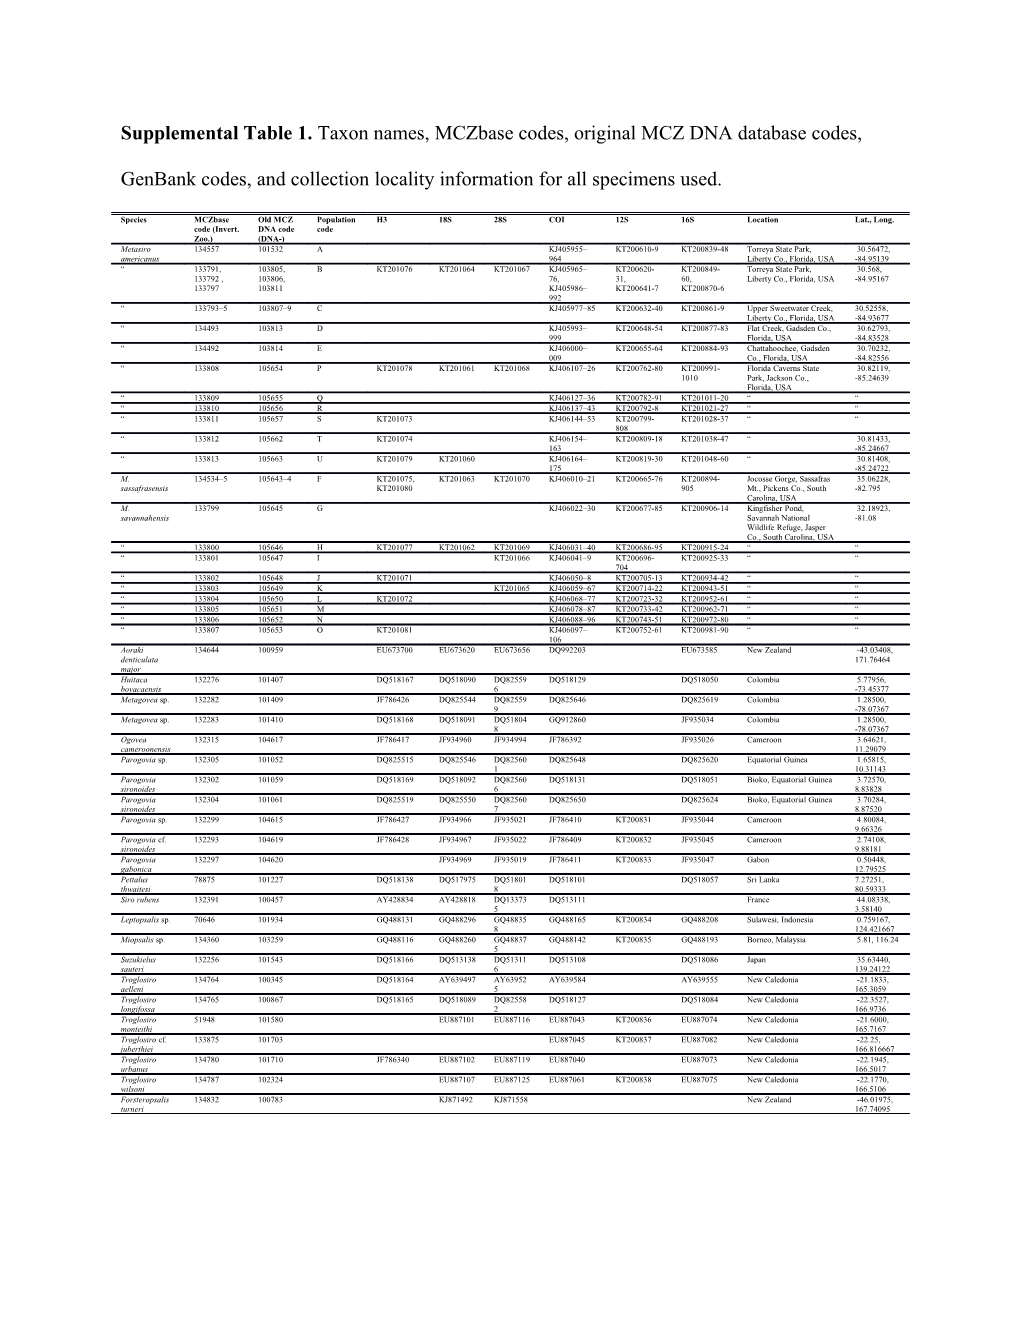 Supplemental Table 1. Taxon Names, Mczbase Codes, Original MCZ DNA Database Codes, Genbank